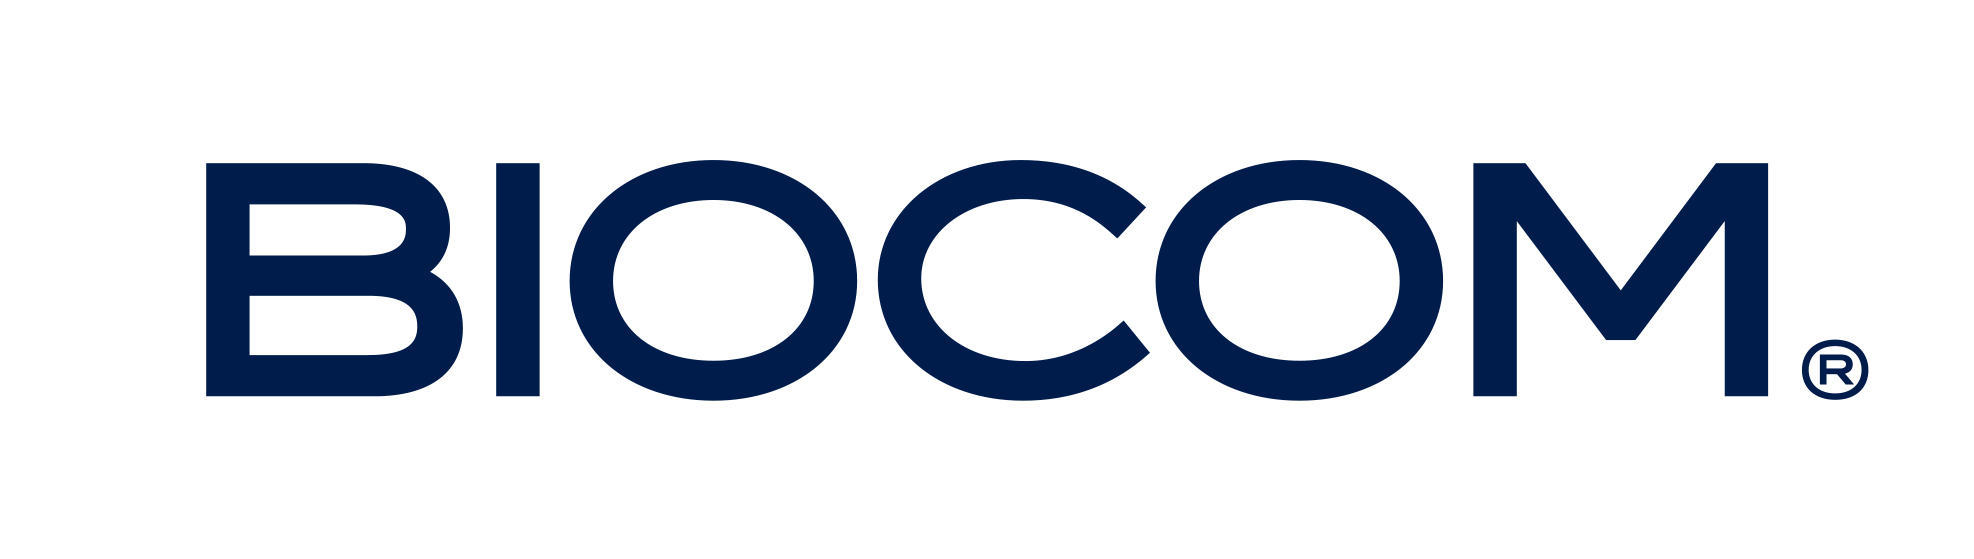 biocom_logo